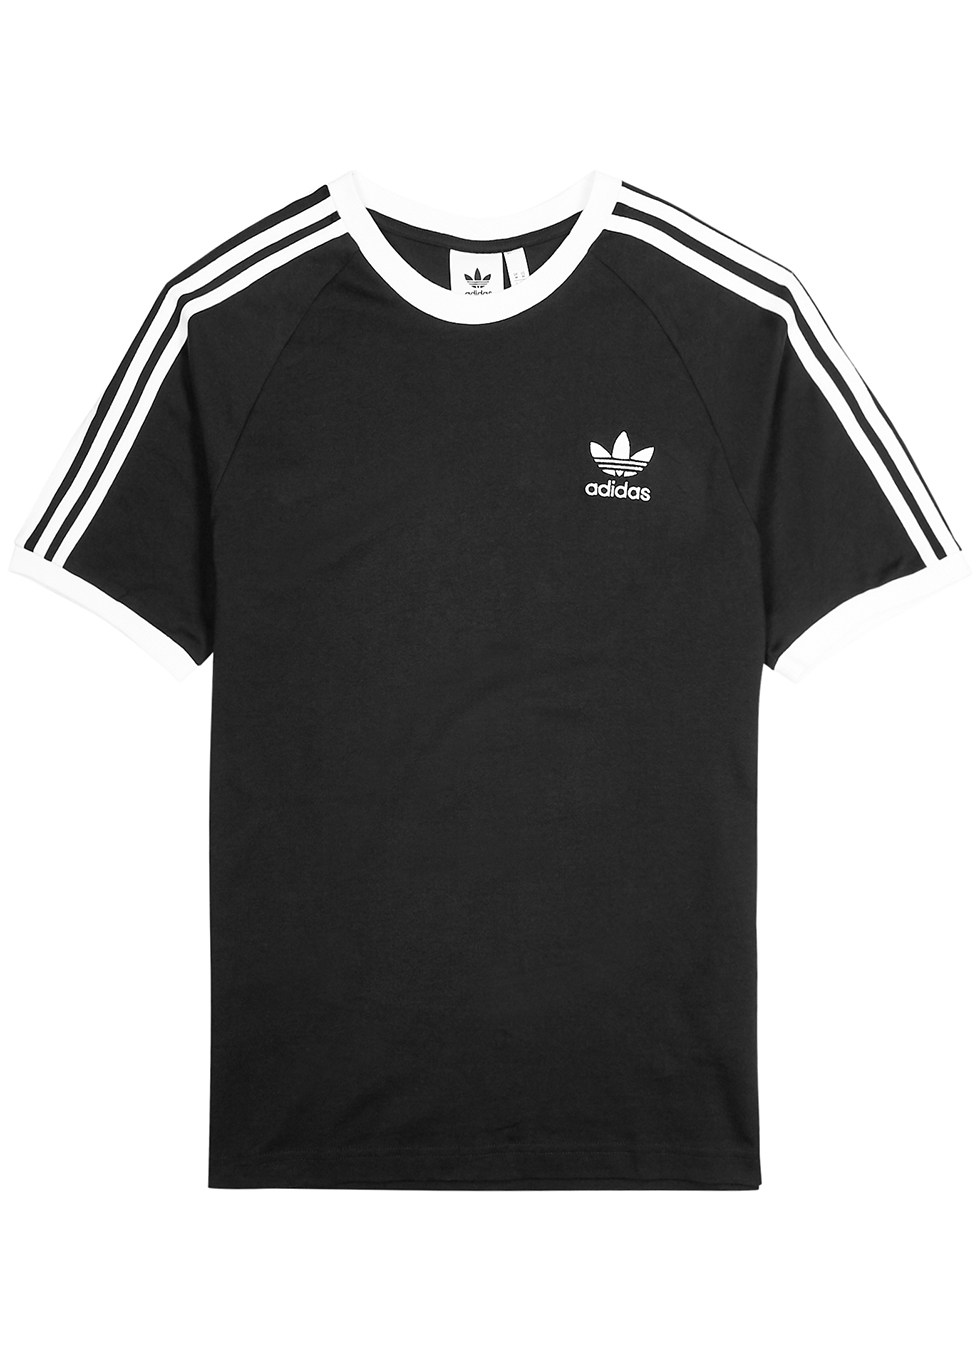 ADIDAS ORIGINALS Black striped cotton T-shirt - Harvey Nichols